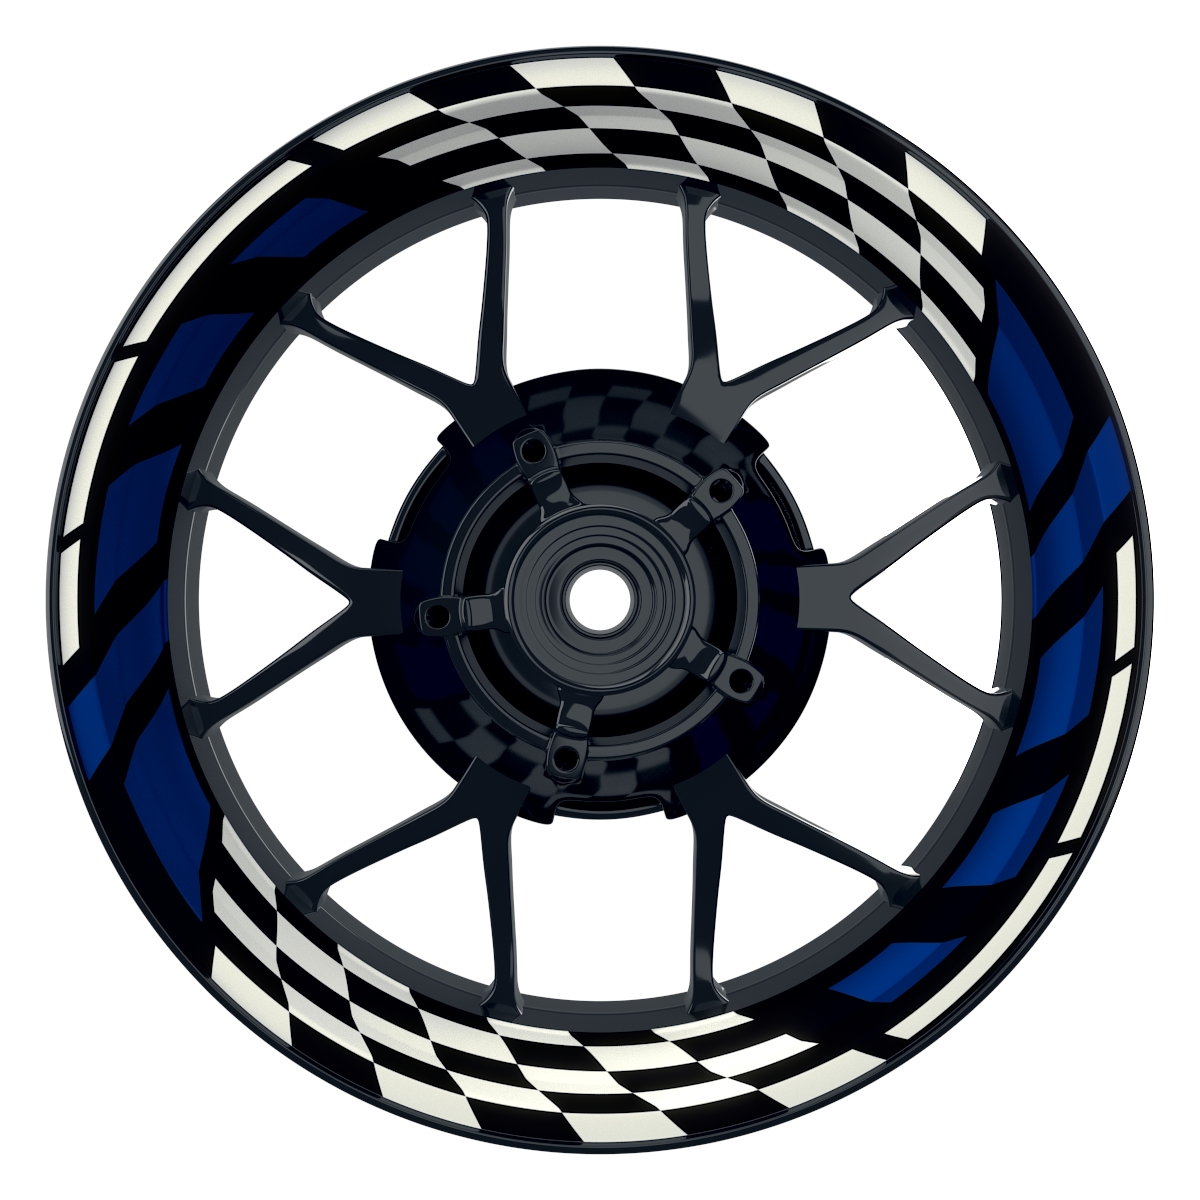 RACE schwarz blau Wheelsticker Felgenaufkleber